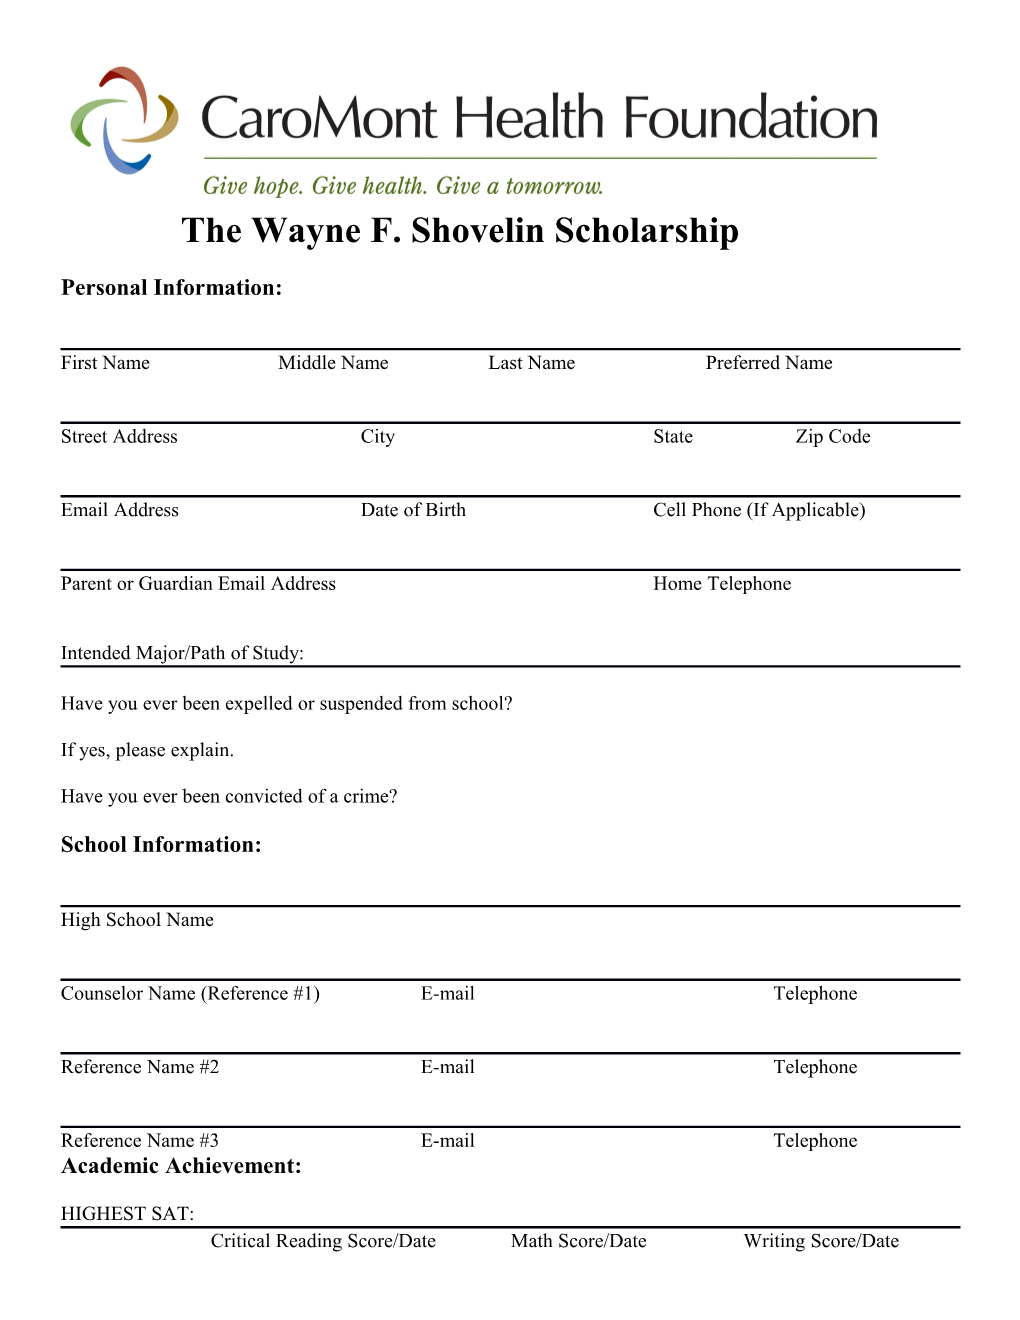 The Wayne F.Shovelin Scholarship